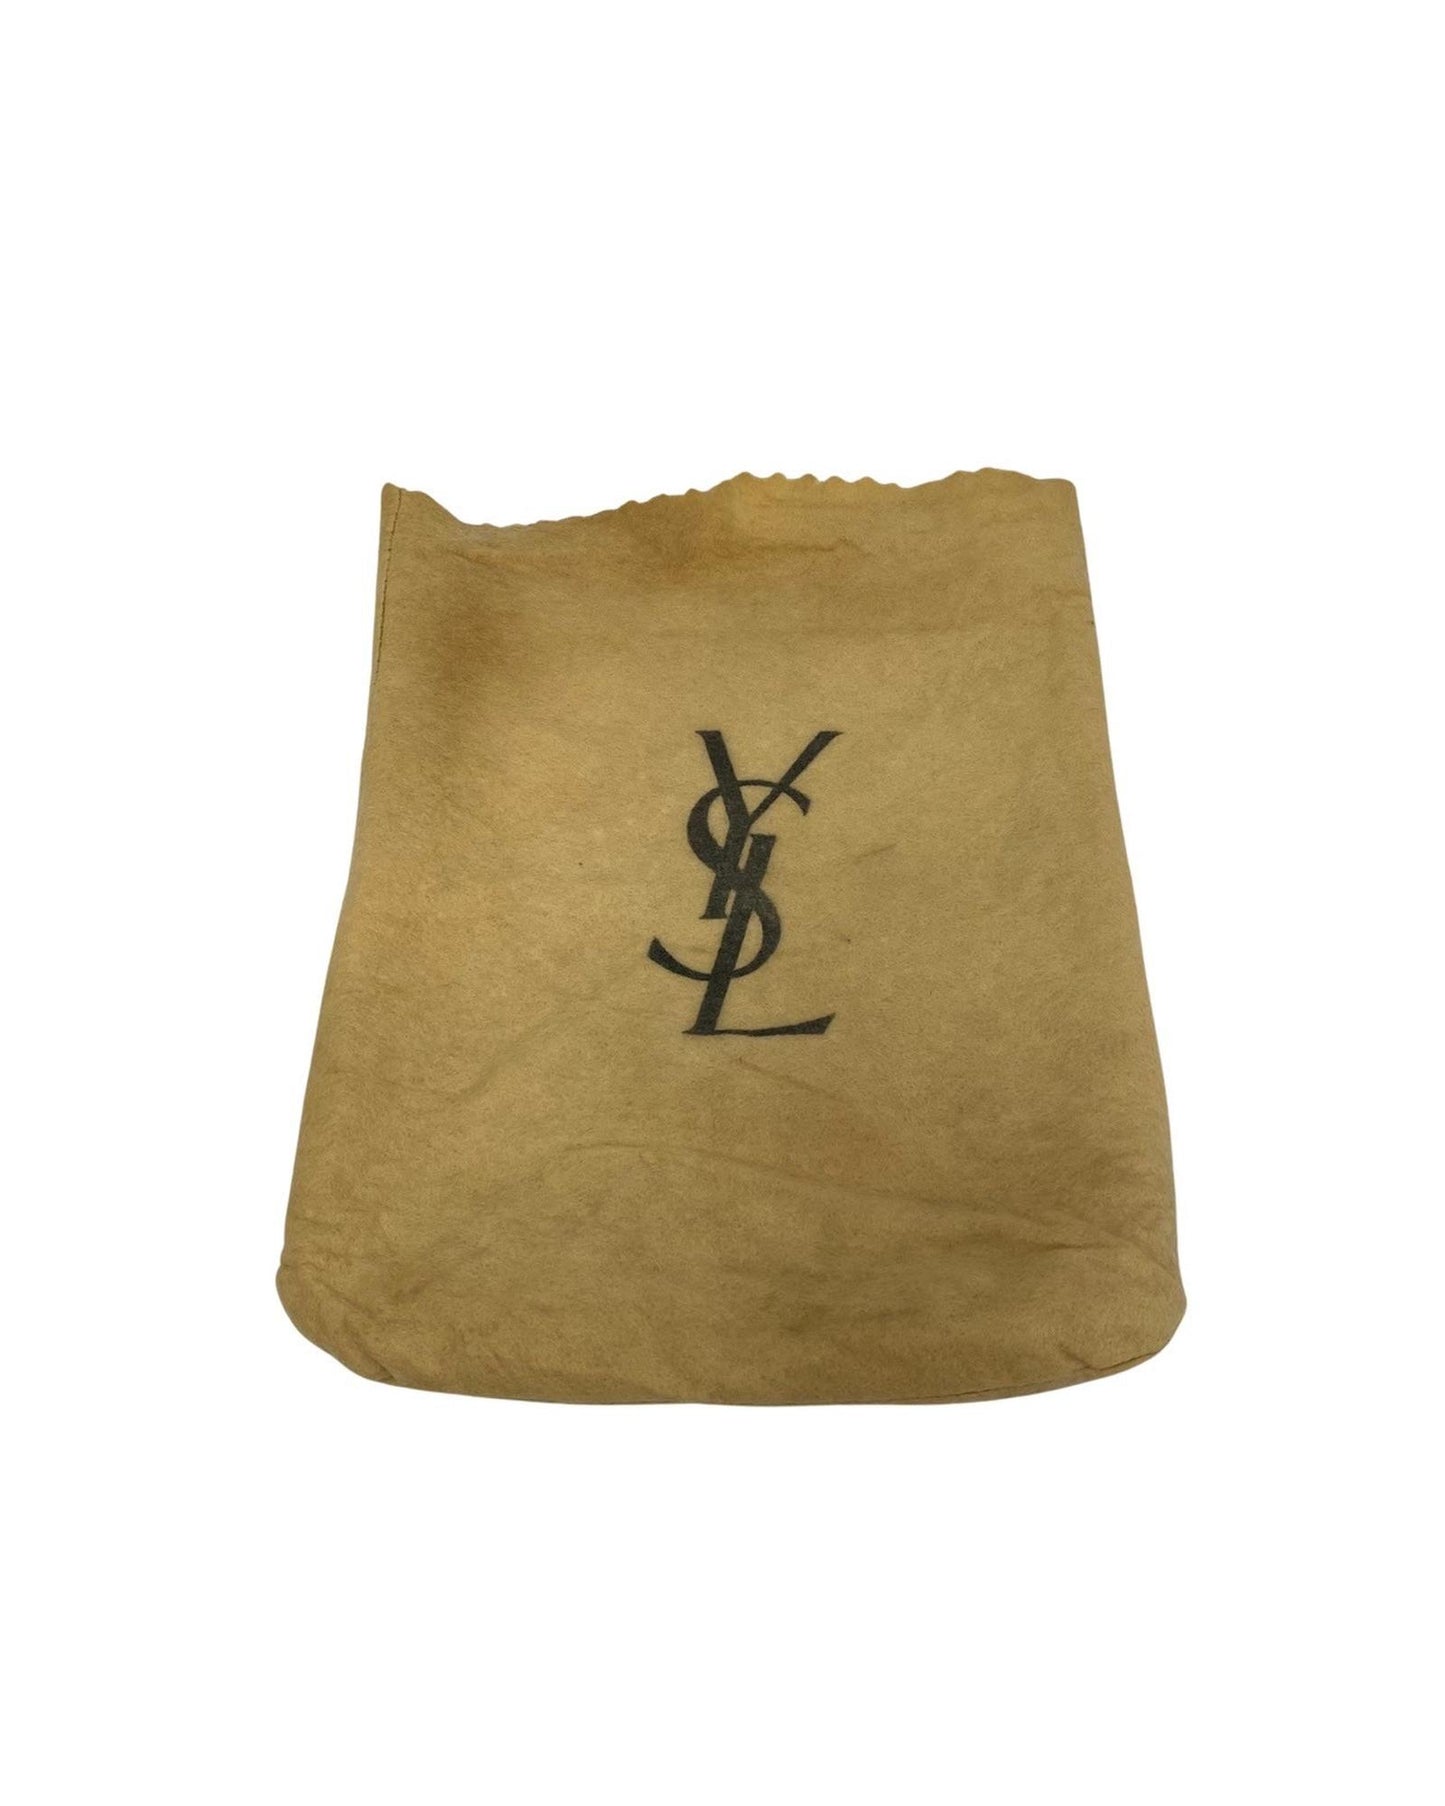 Yves Saint Laurent Women's Envelope Canvas Crossbody Bag in Neutral beige.